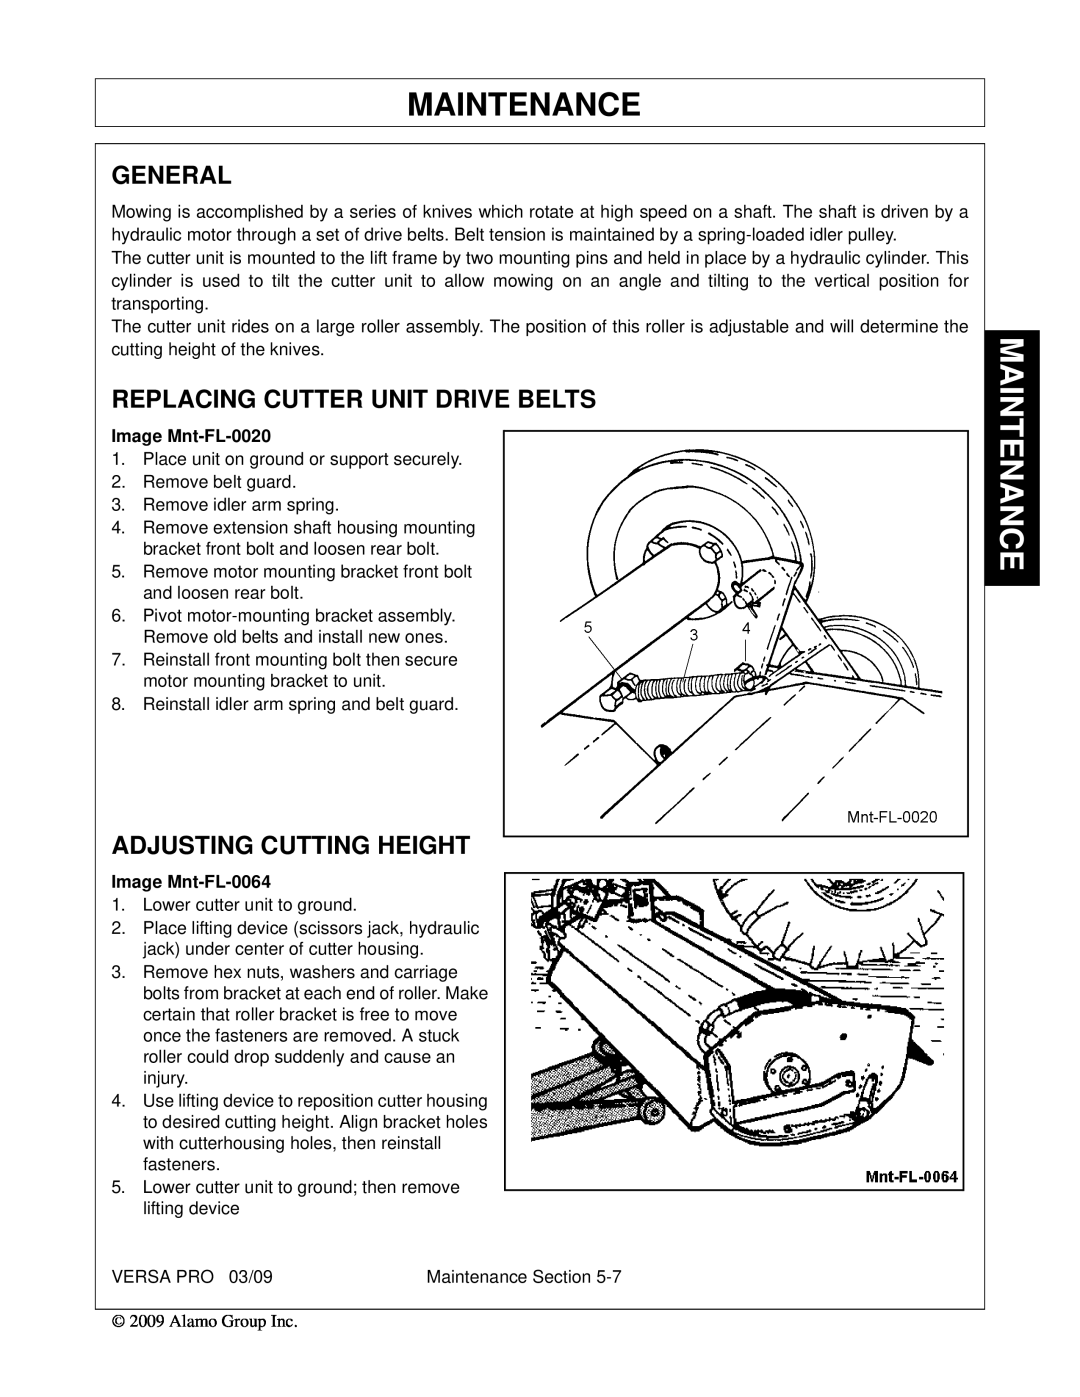 Alamo 803350C manual General, Replacing Cutter Unit Drive Belts, Adjusting Cutting Height, Maintenance, Image Mnt-FL-0020 